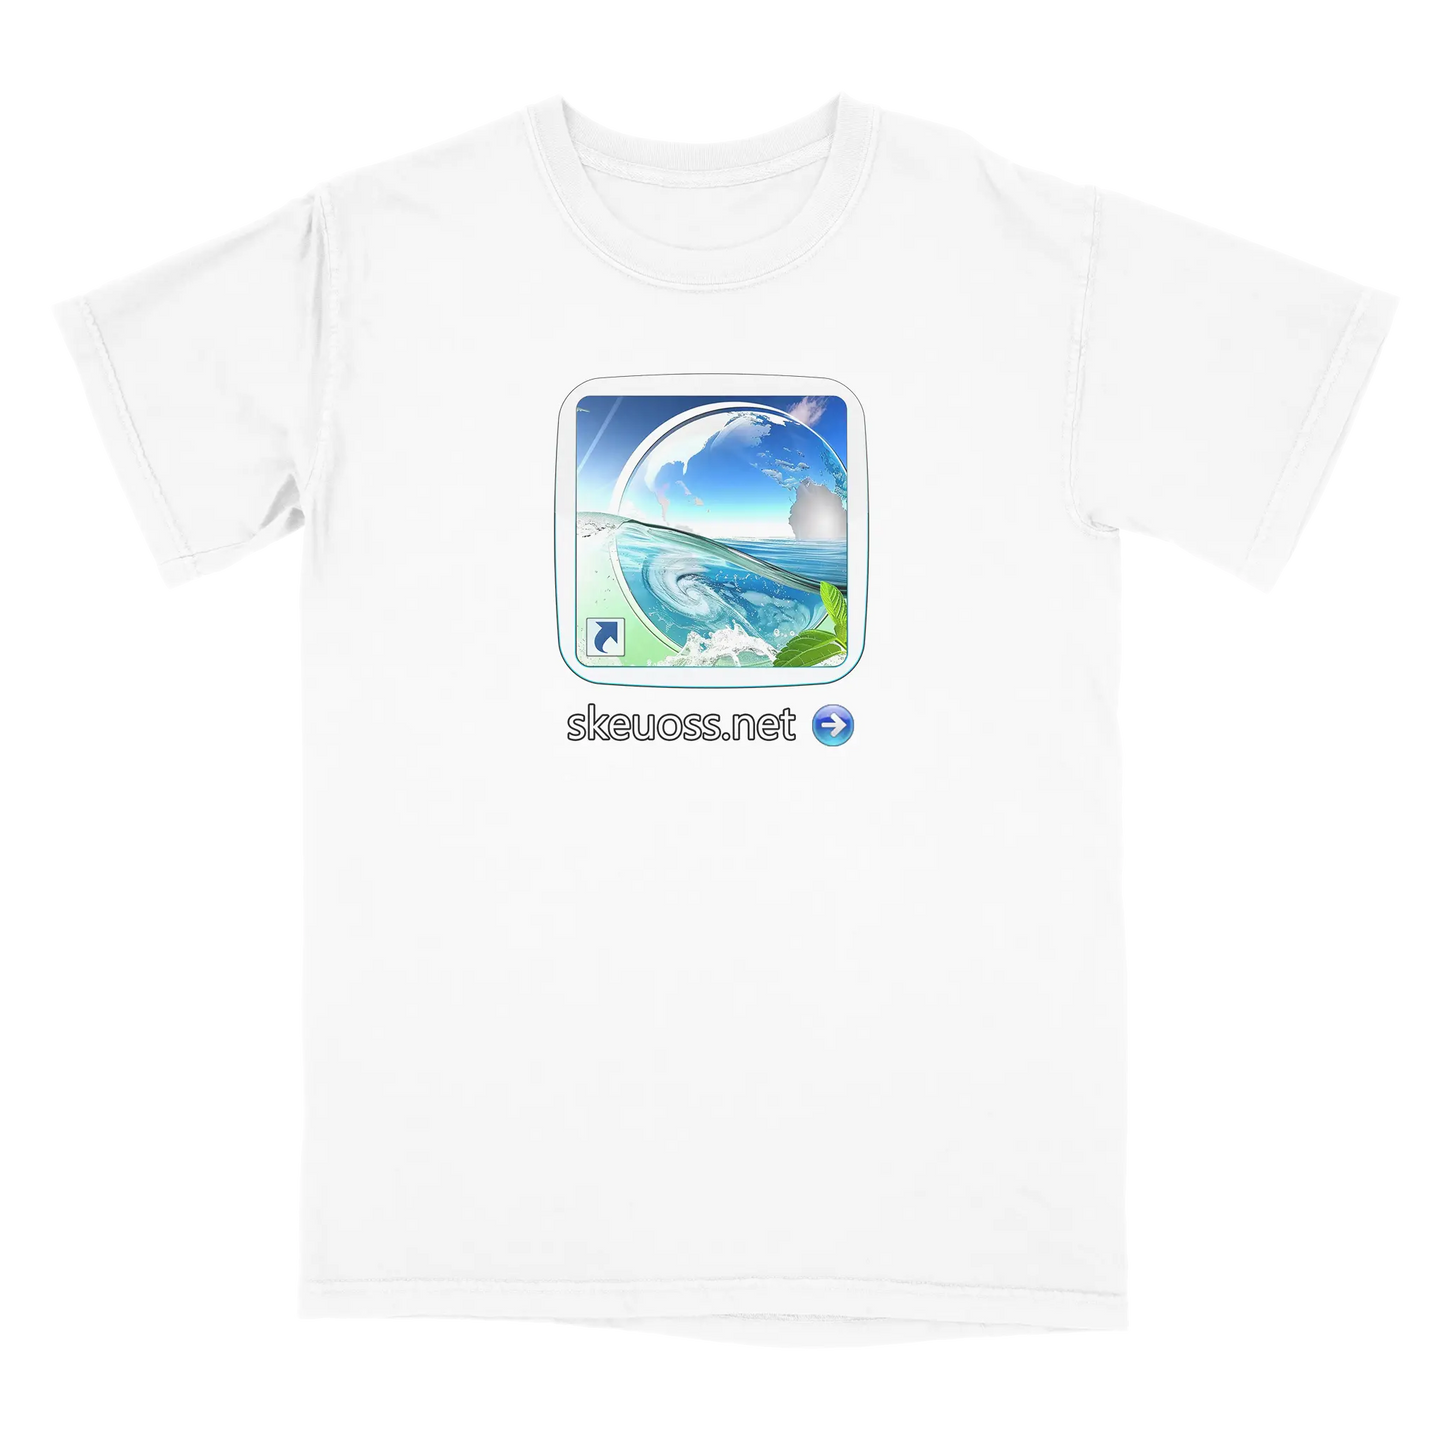 Frutiger Aero T-shirt - User Login Collection - User 383